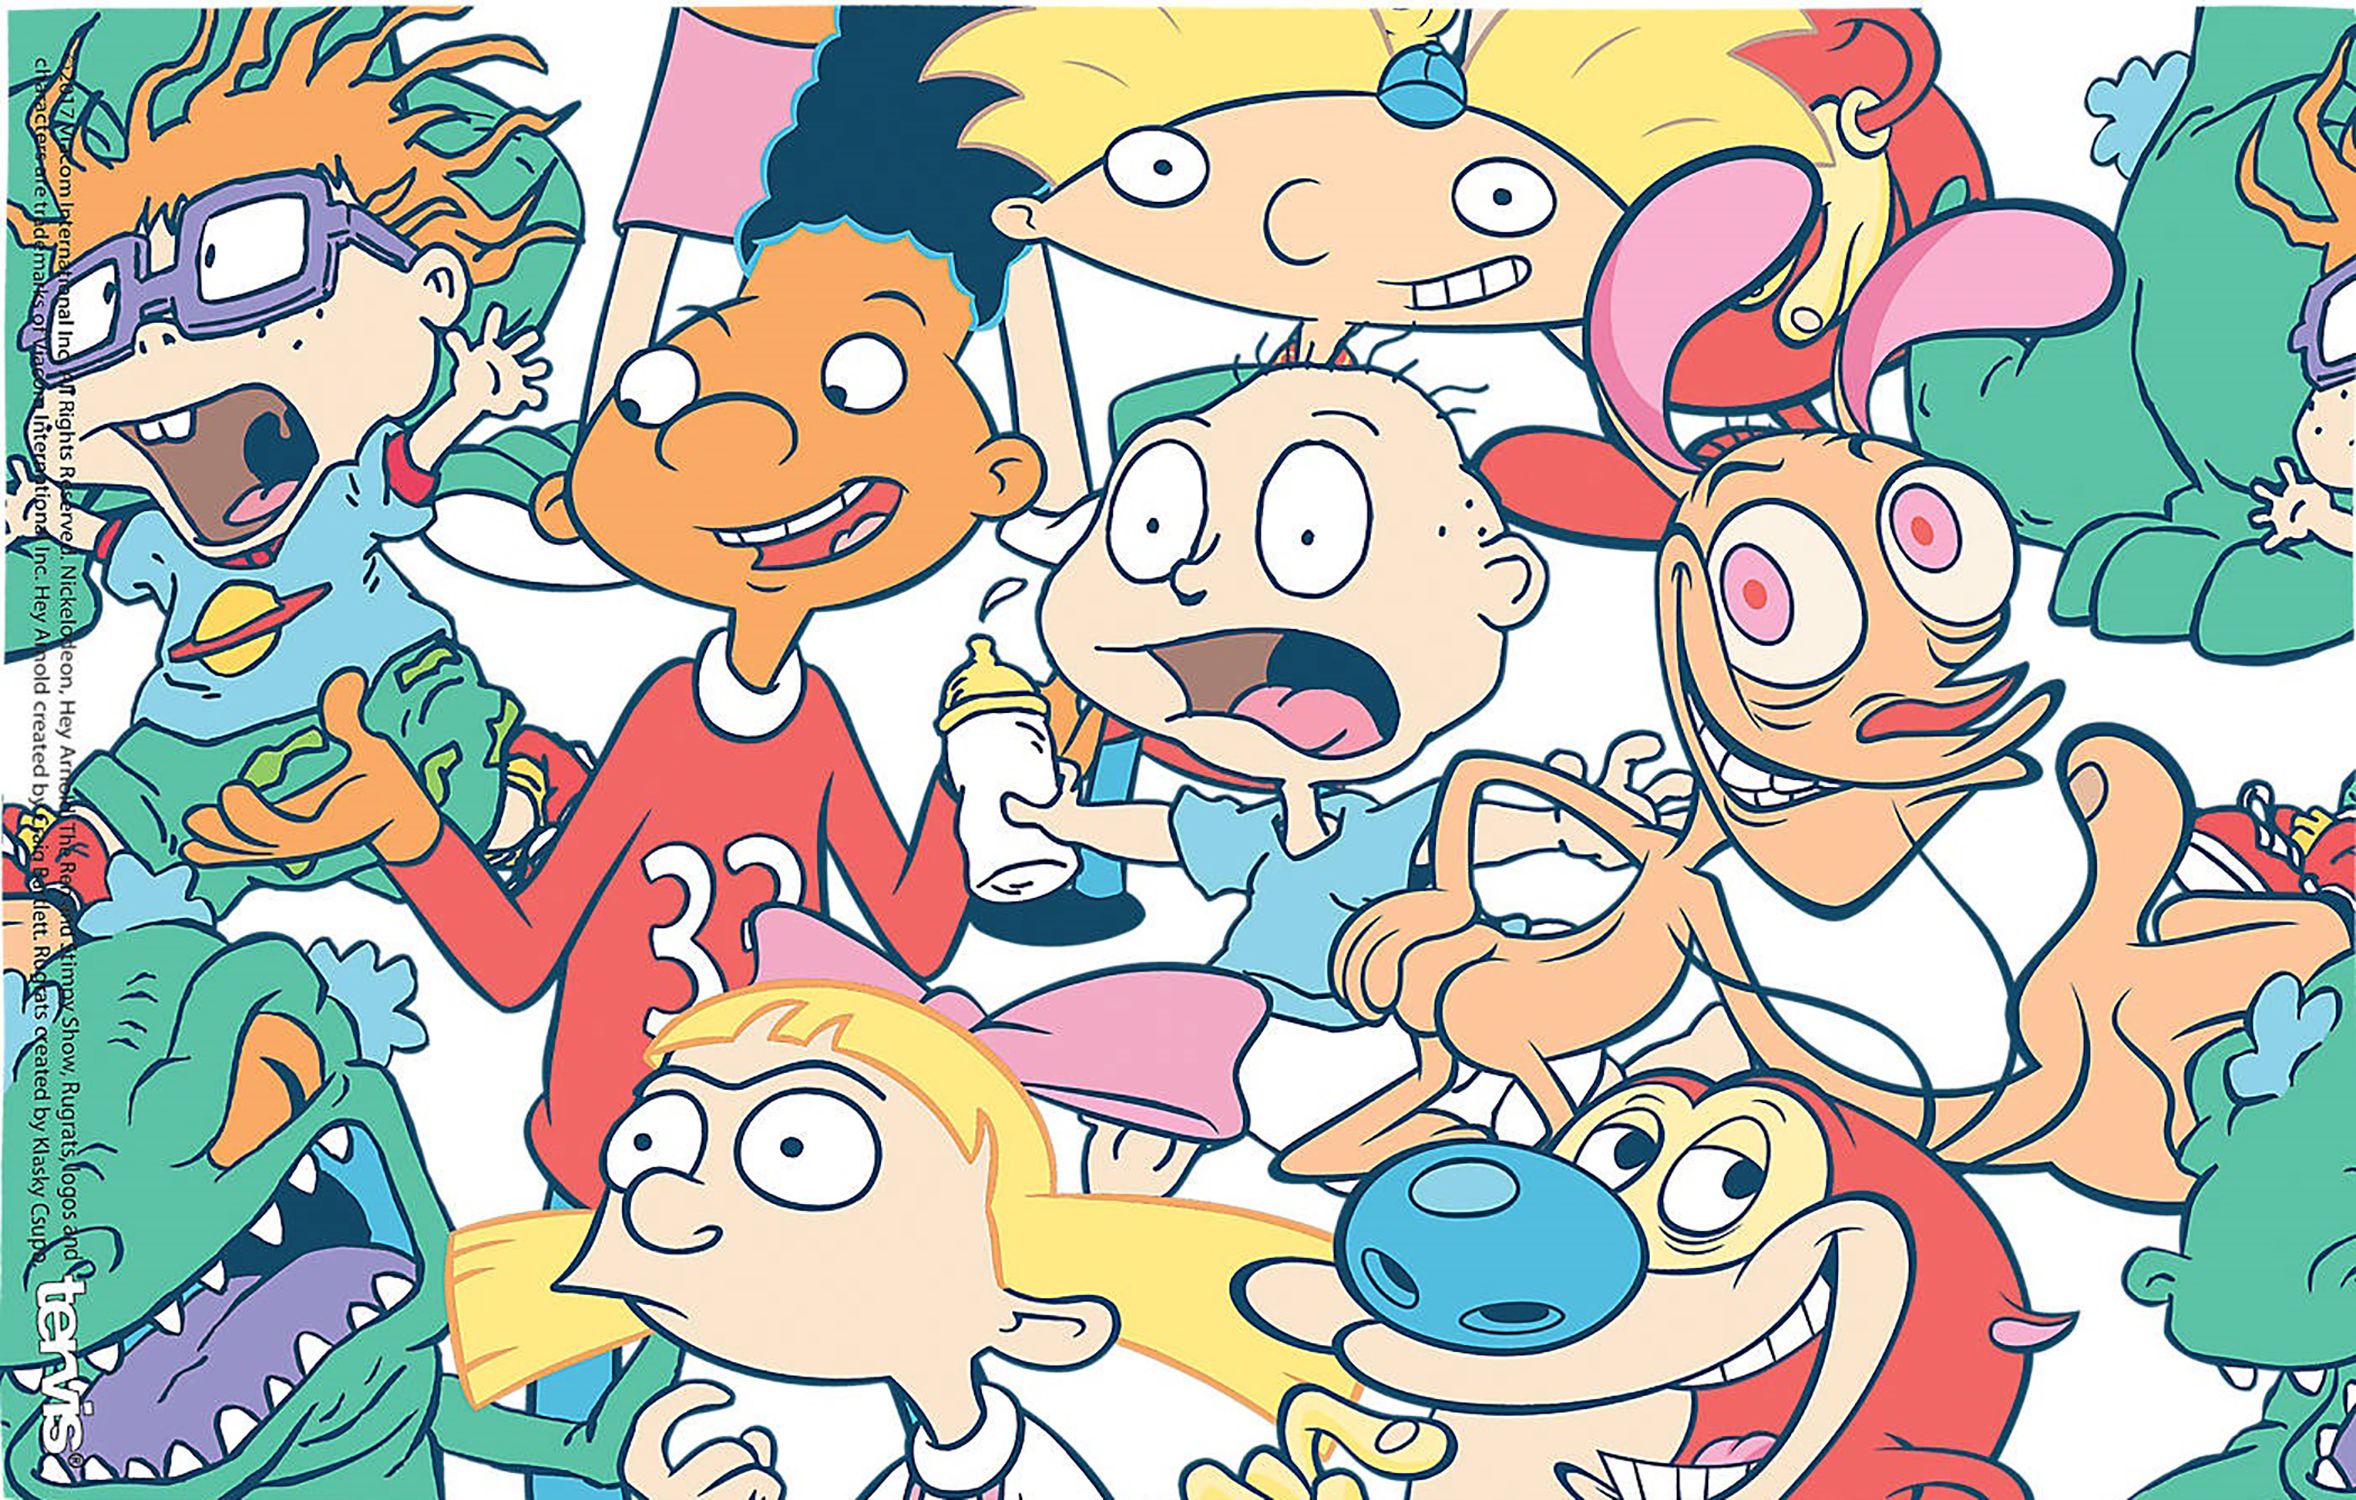 Nickelodeon Nicktoons 90s Cartoons